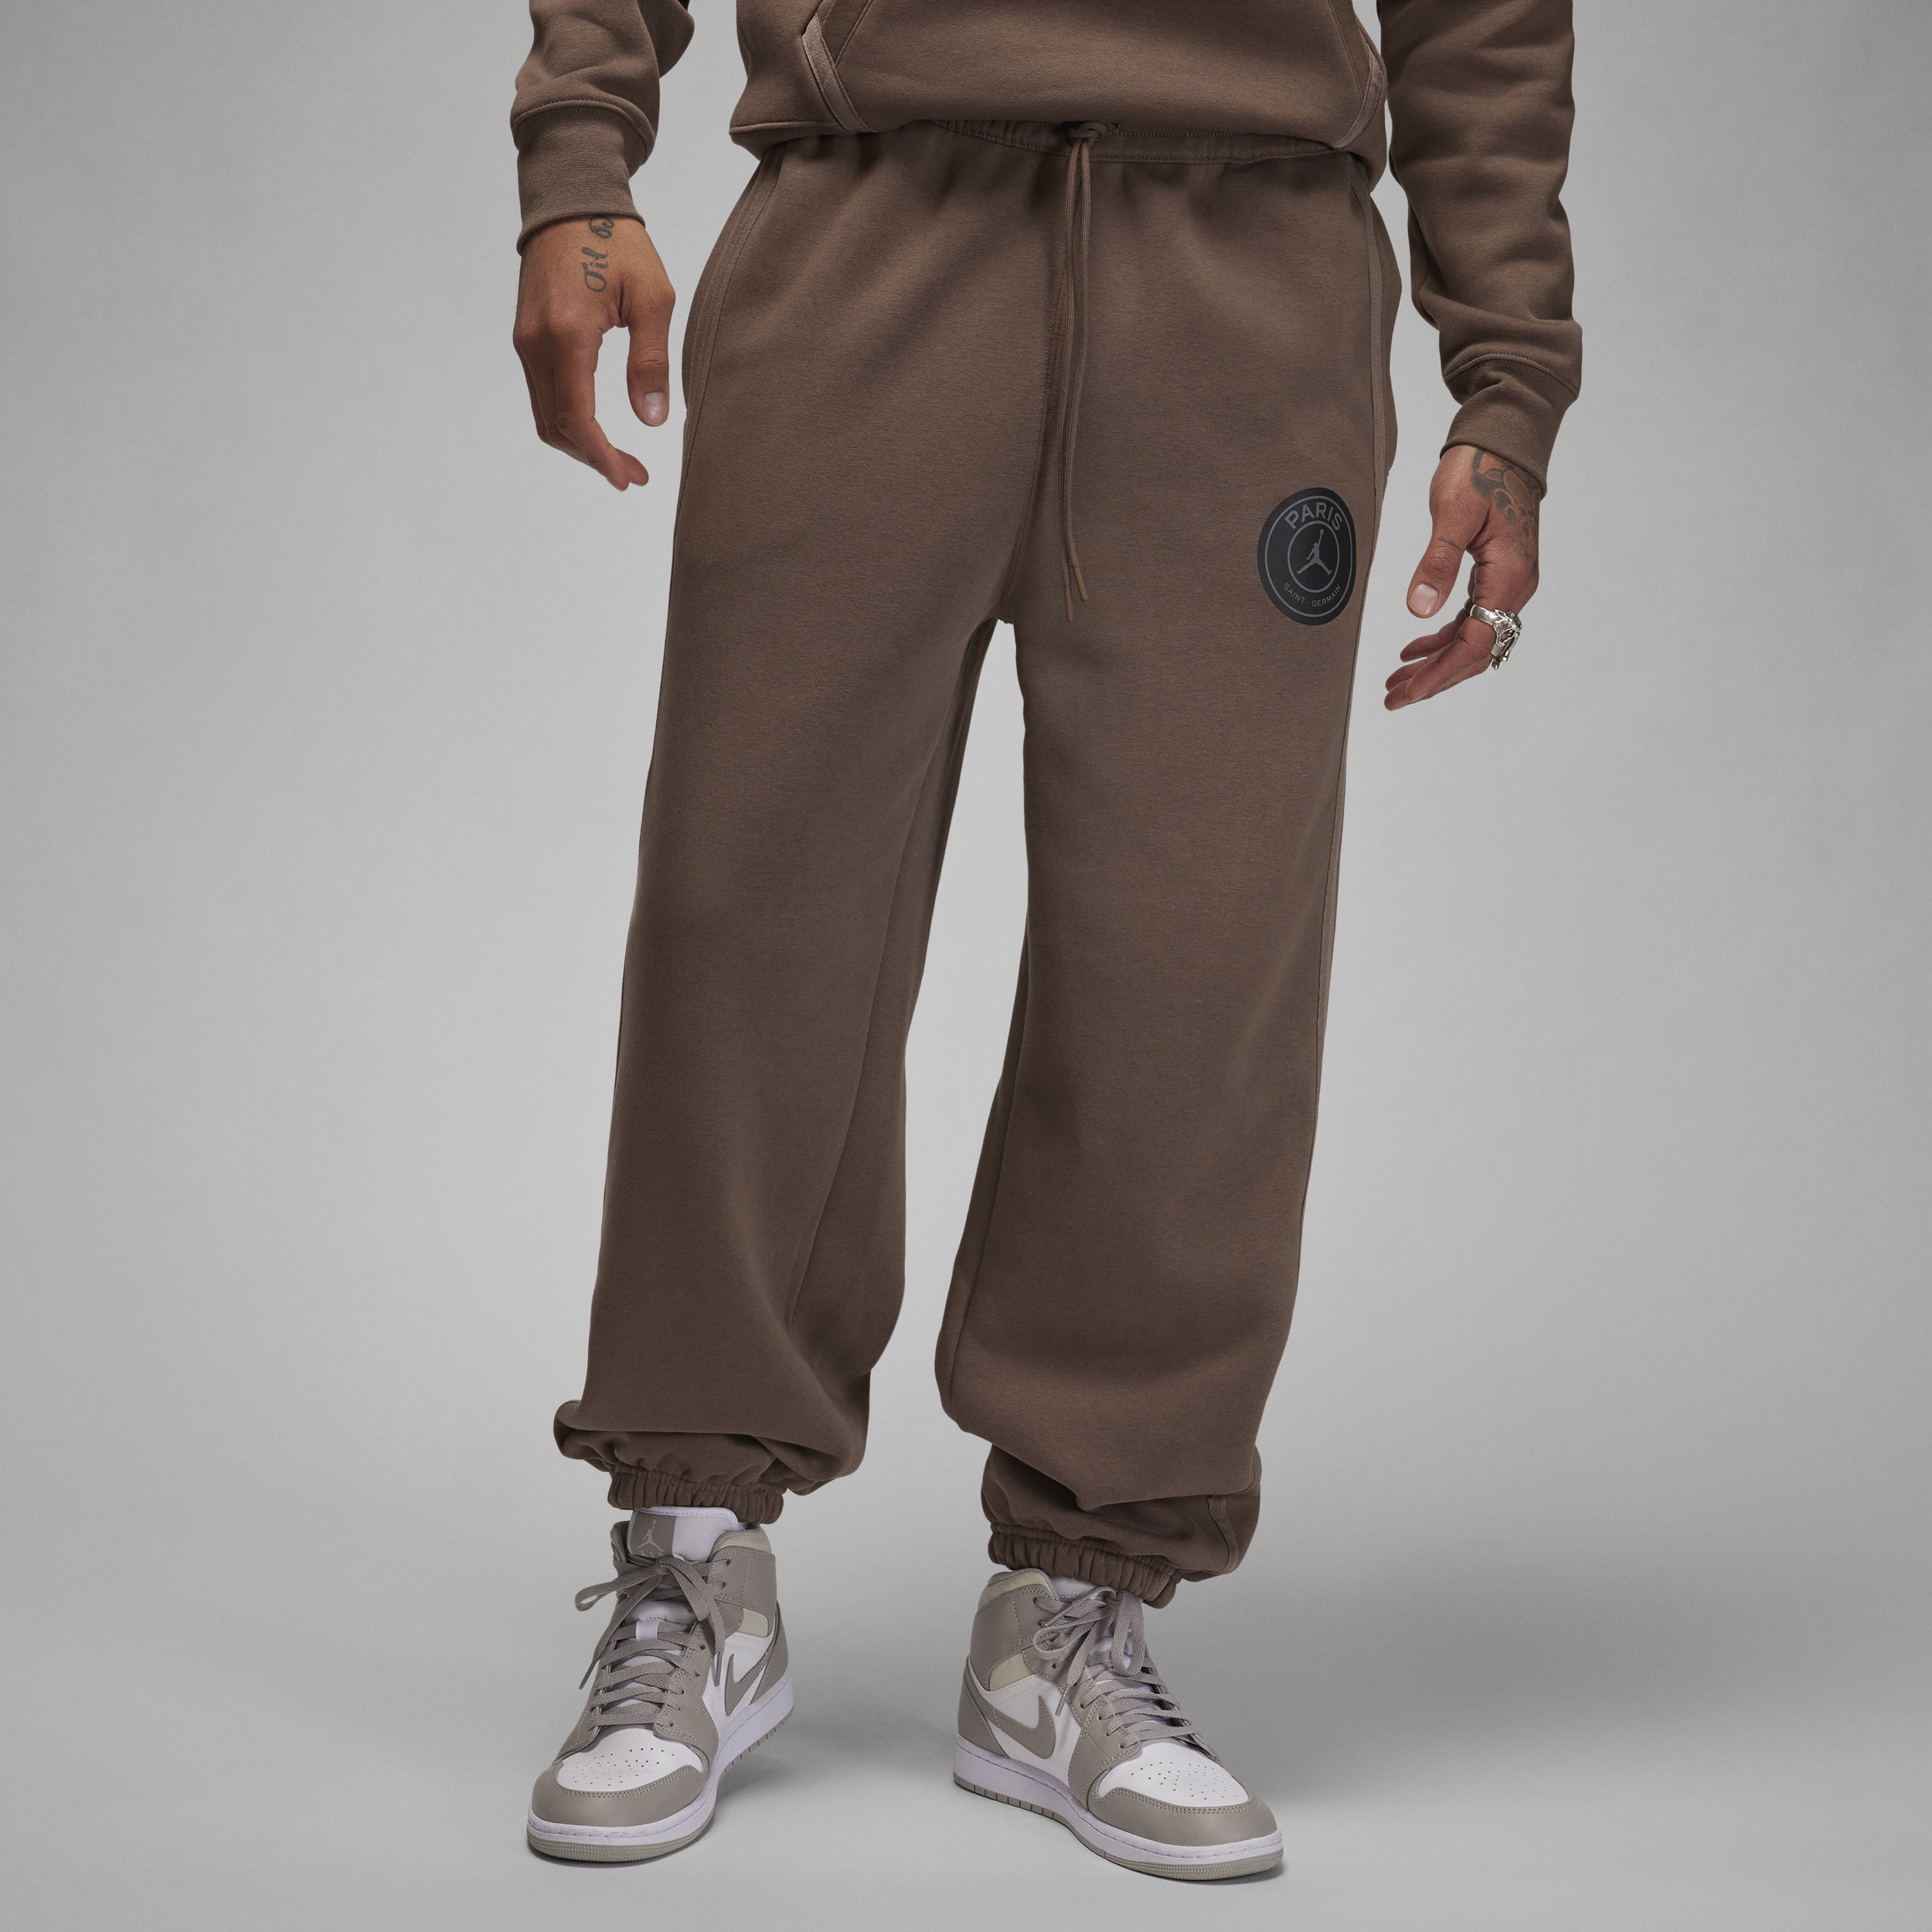 Nike Pantaloni in fleece Paris Saint-Germain - Uomo - Marrone